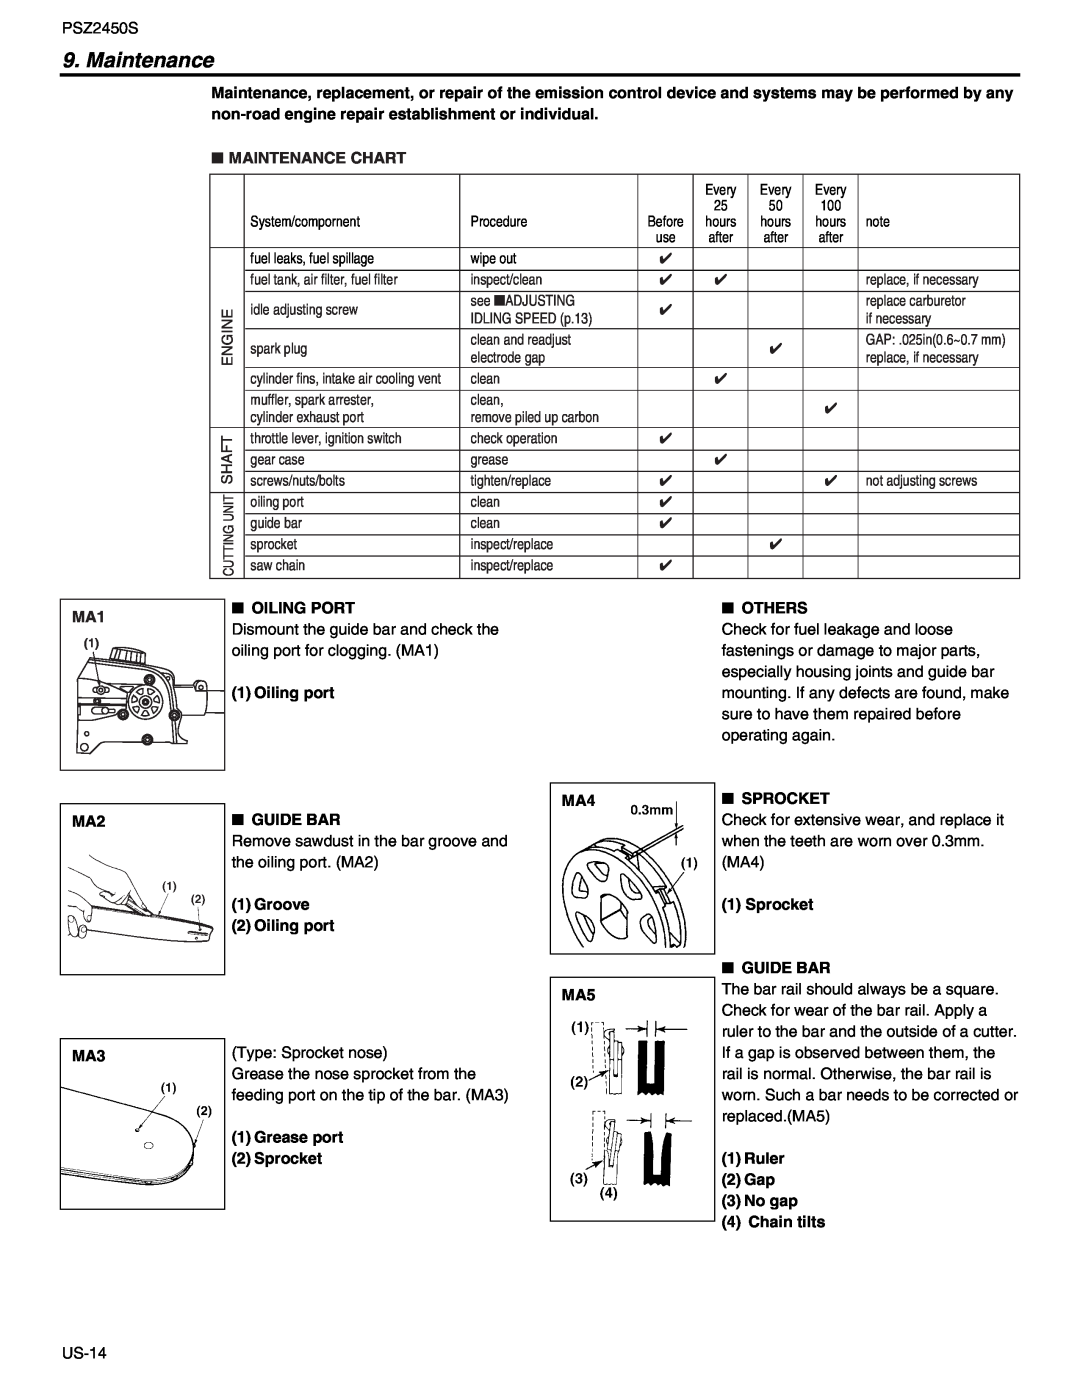 RedMax PSZ2450S manual Maintenance 